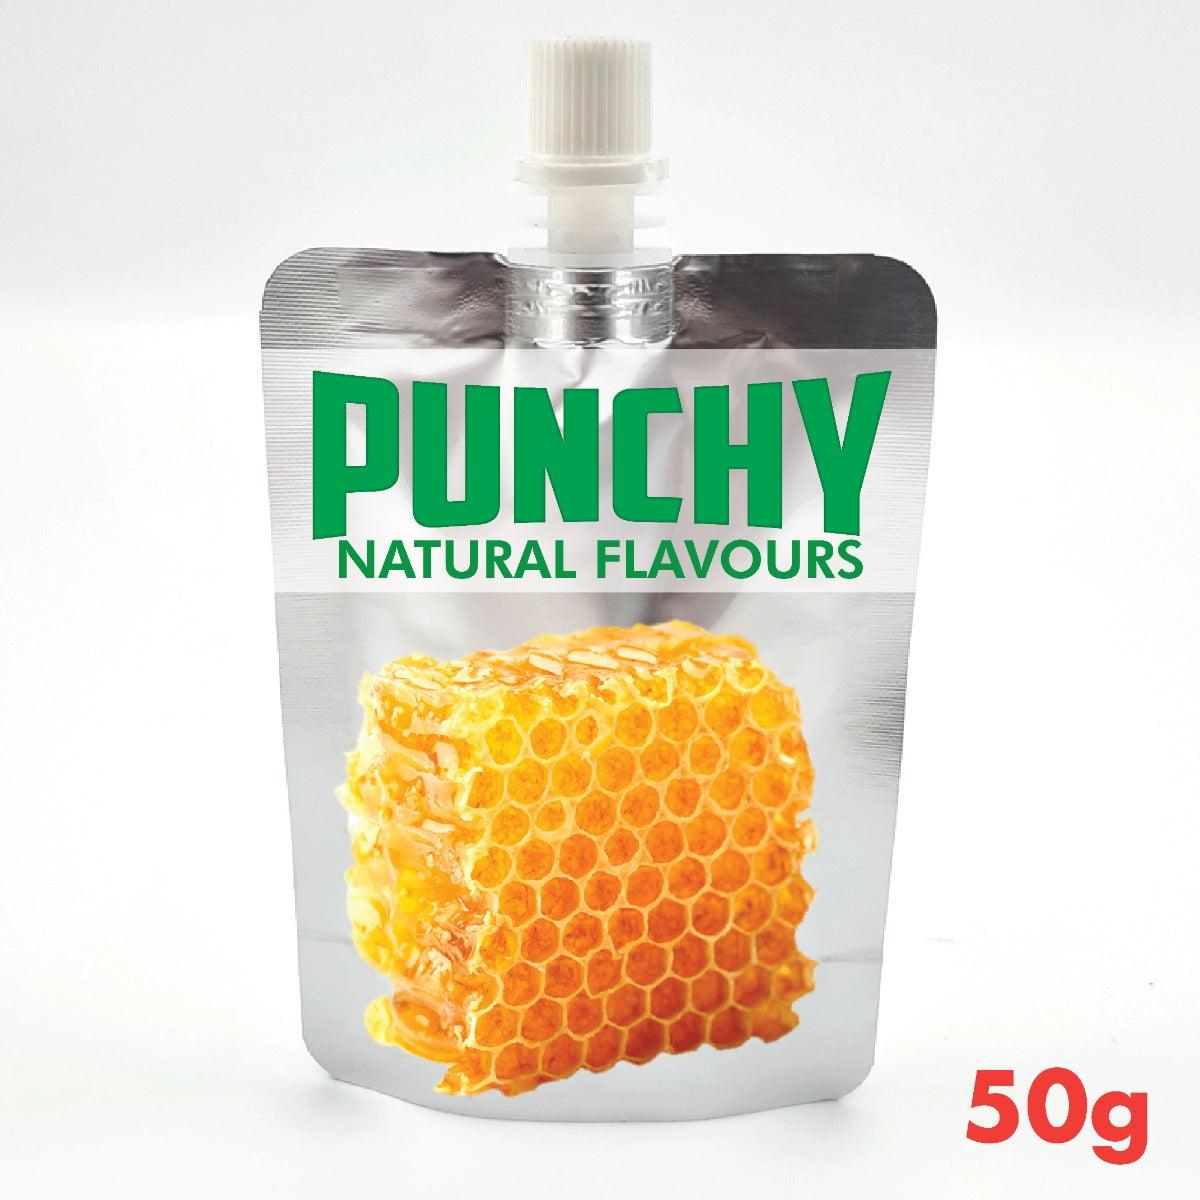 PUNCHY - Honeycomb Flavour Natural - 100ml - KegLand